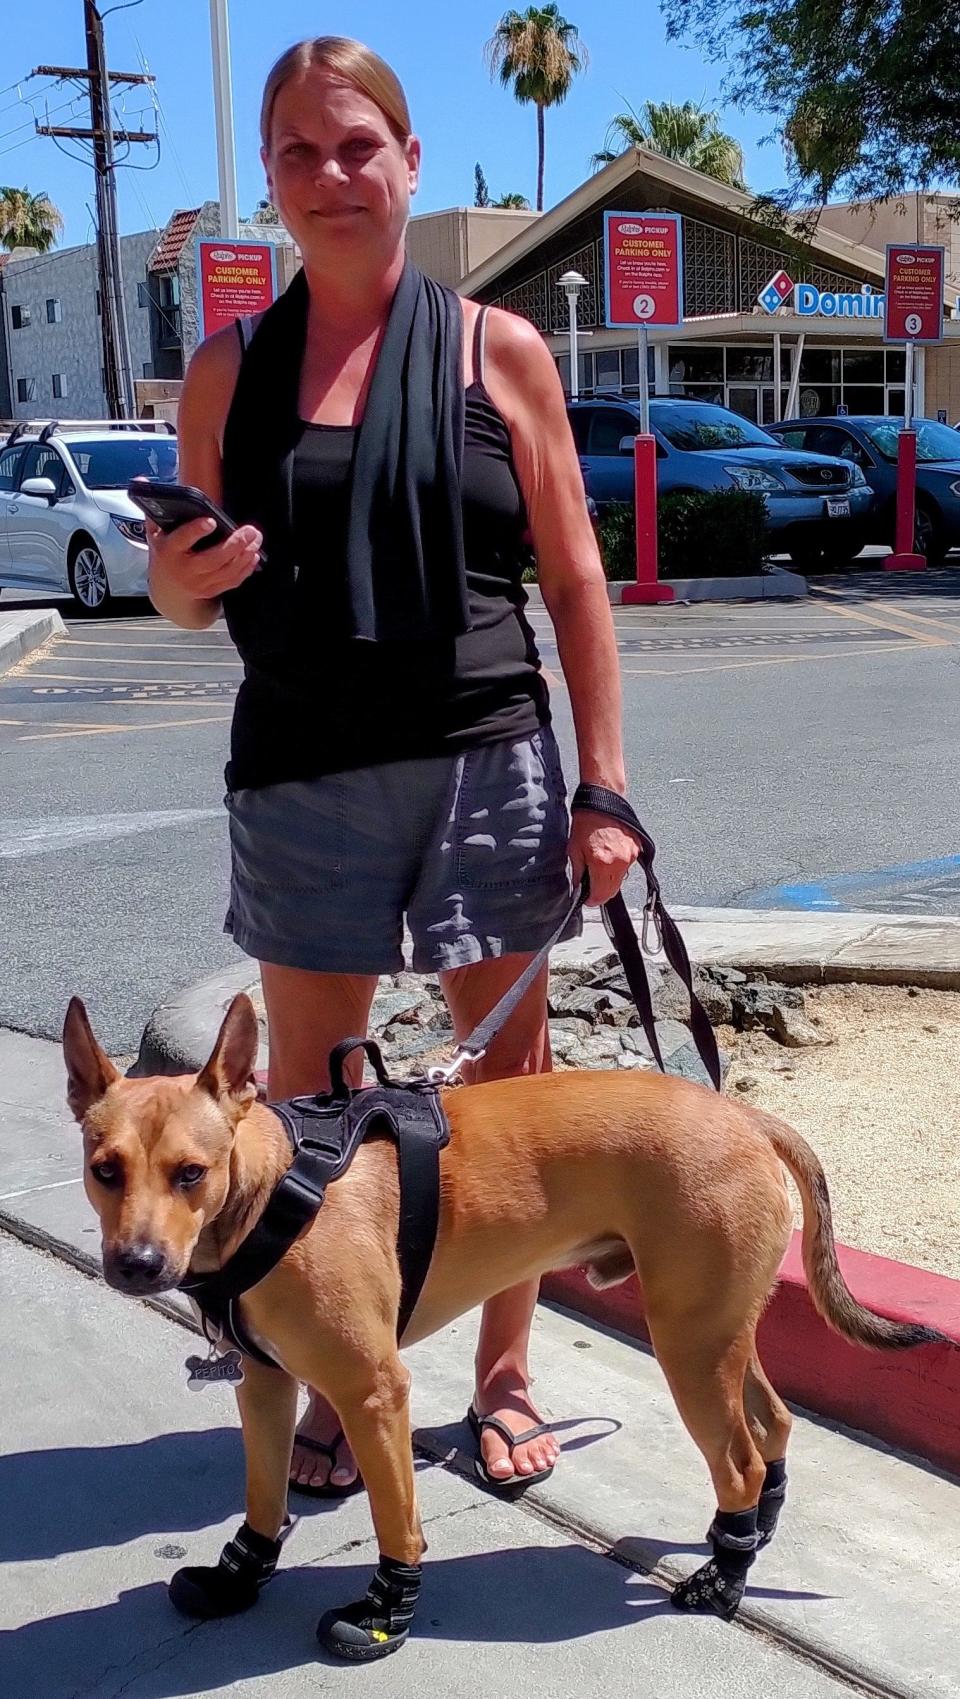 Crystal Vandenberg and her dog, Pepito, in Palm Springs, Calif., on July 10, 2022.